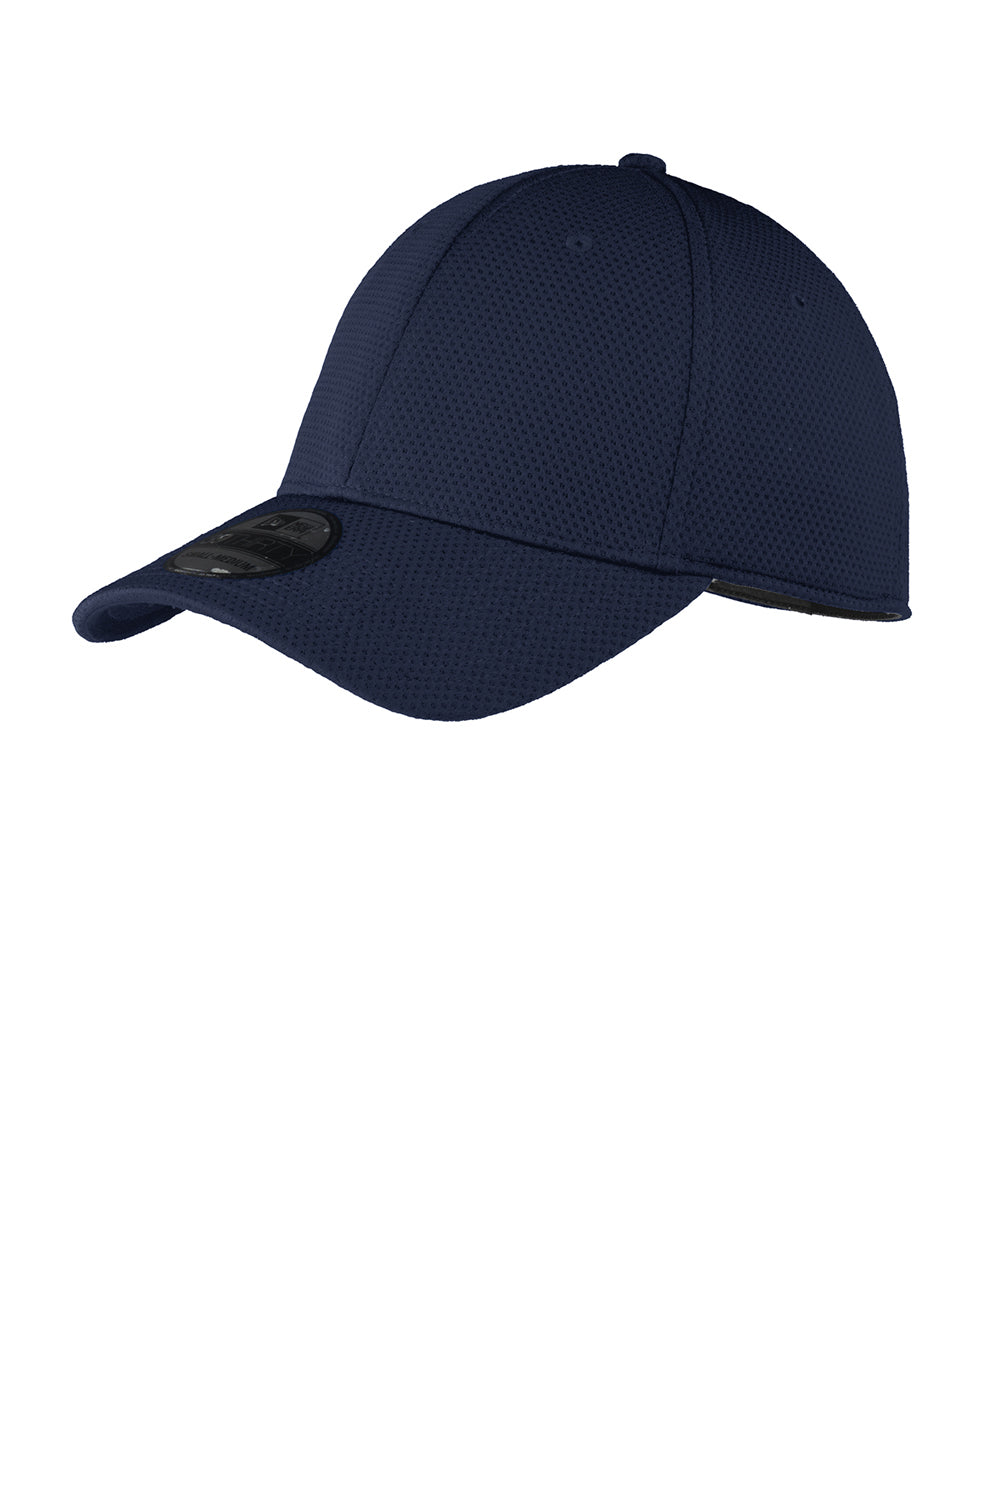 New Era NE1090 Mens Navy Blue Moisture Wicking Stretch Fit Hat